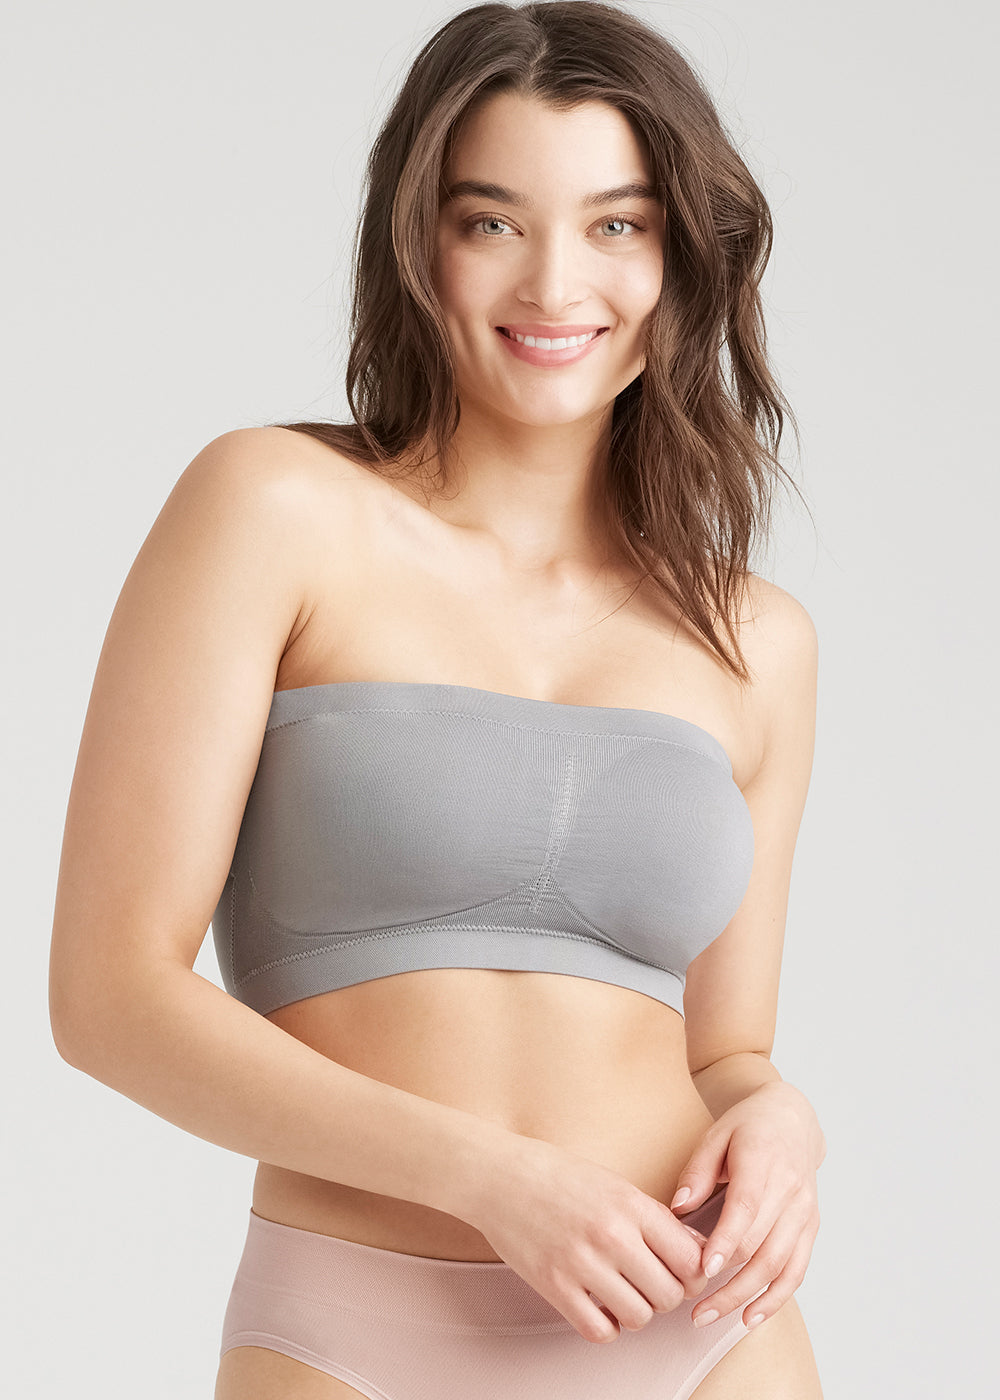 Wholesale size 32c bra For Supportive Underwear 